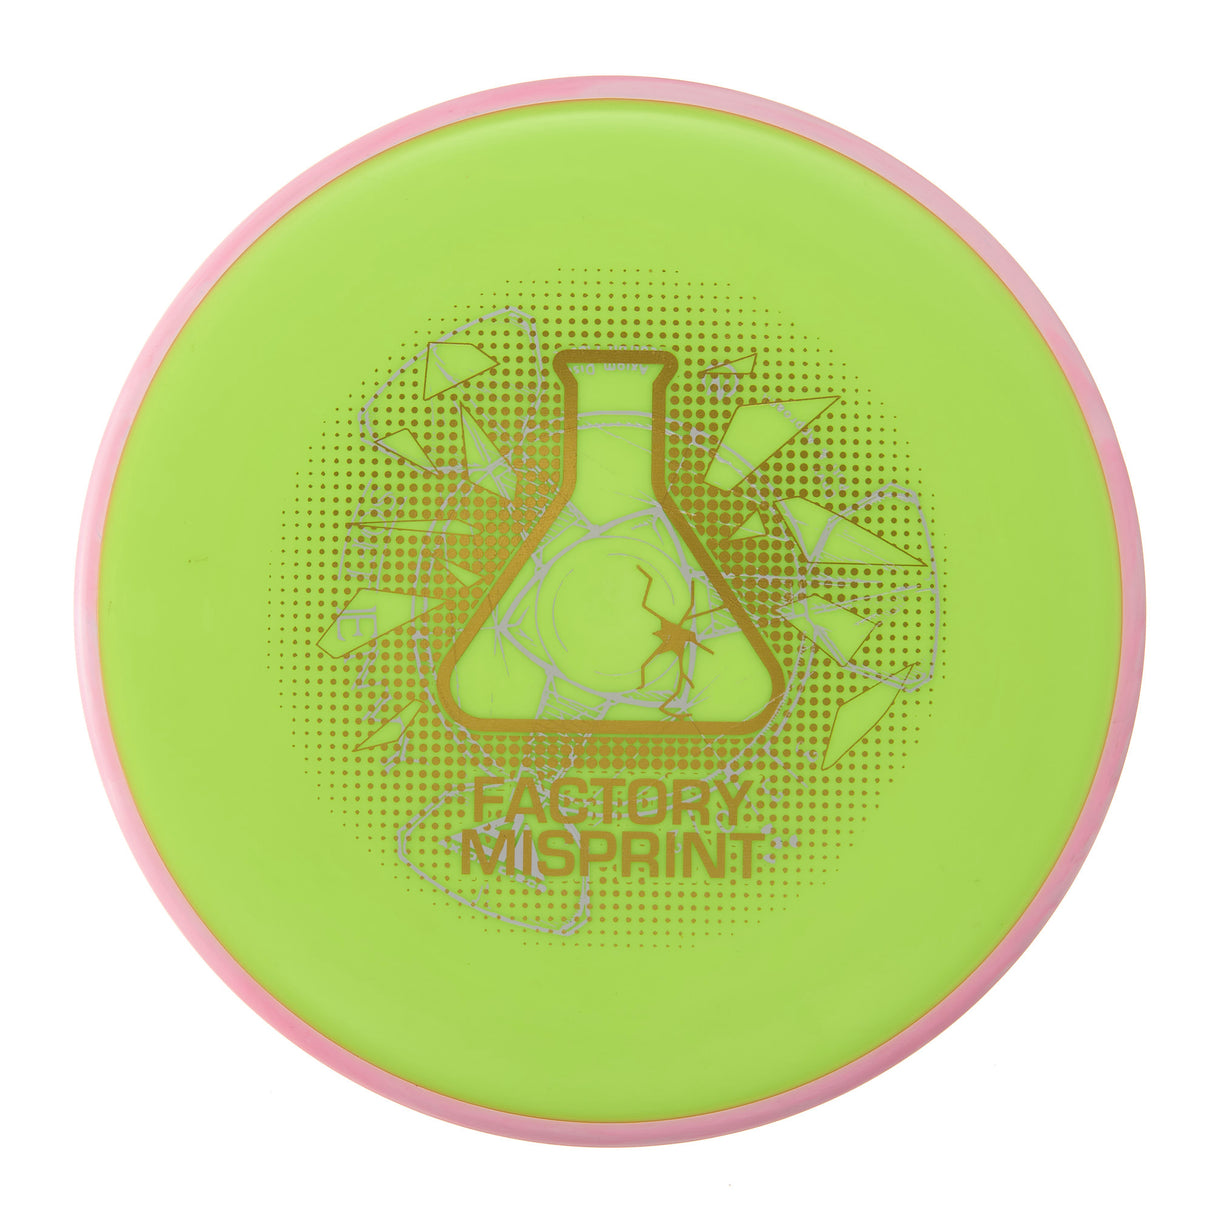 Axiom Envy - Factory Misprint Neutron Soft 170g | Style 0001